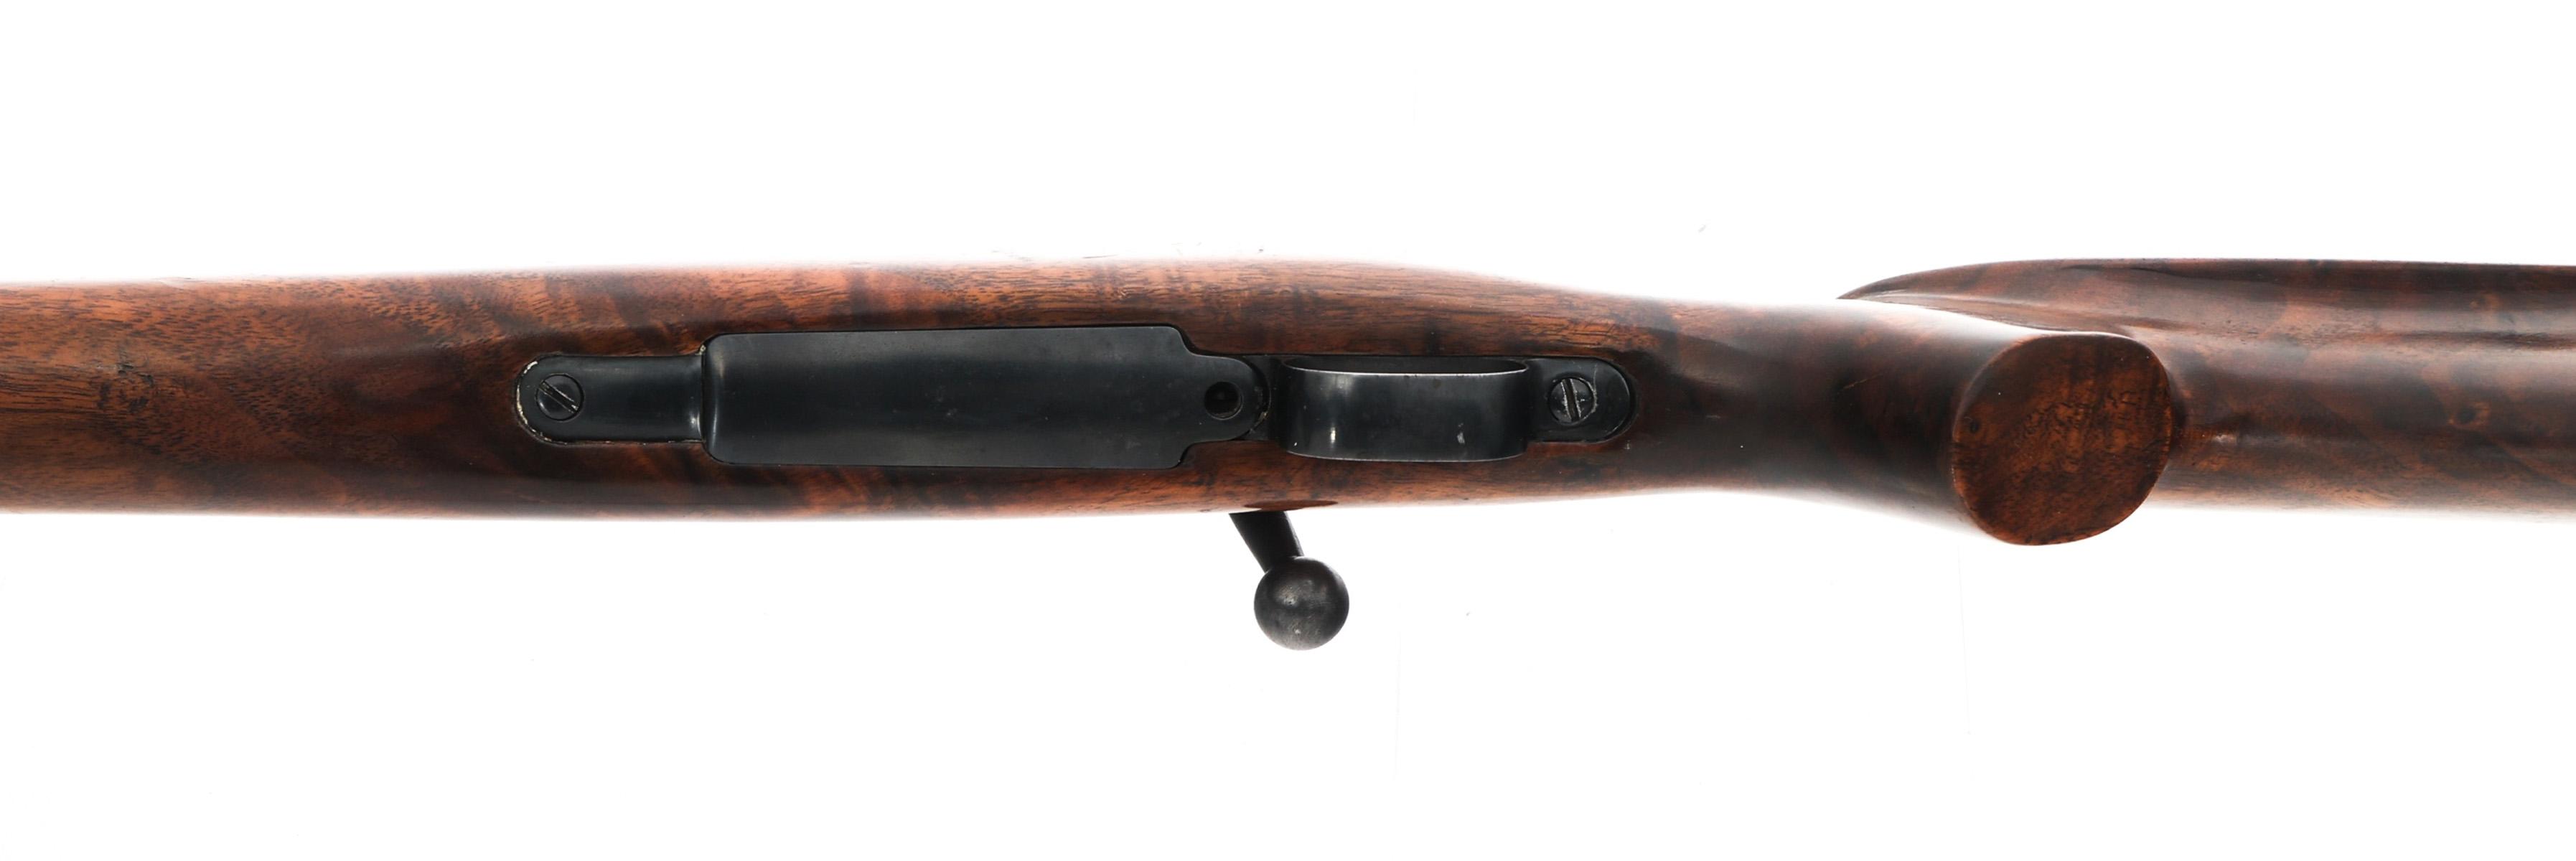 SPORTERIZED US SPRINGFIELD M1903 .30-06 CAL RIFLE